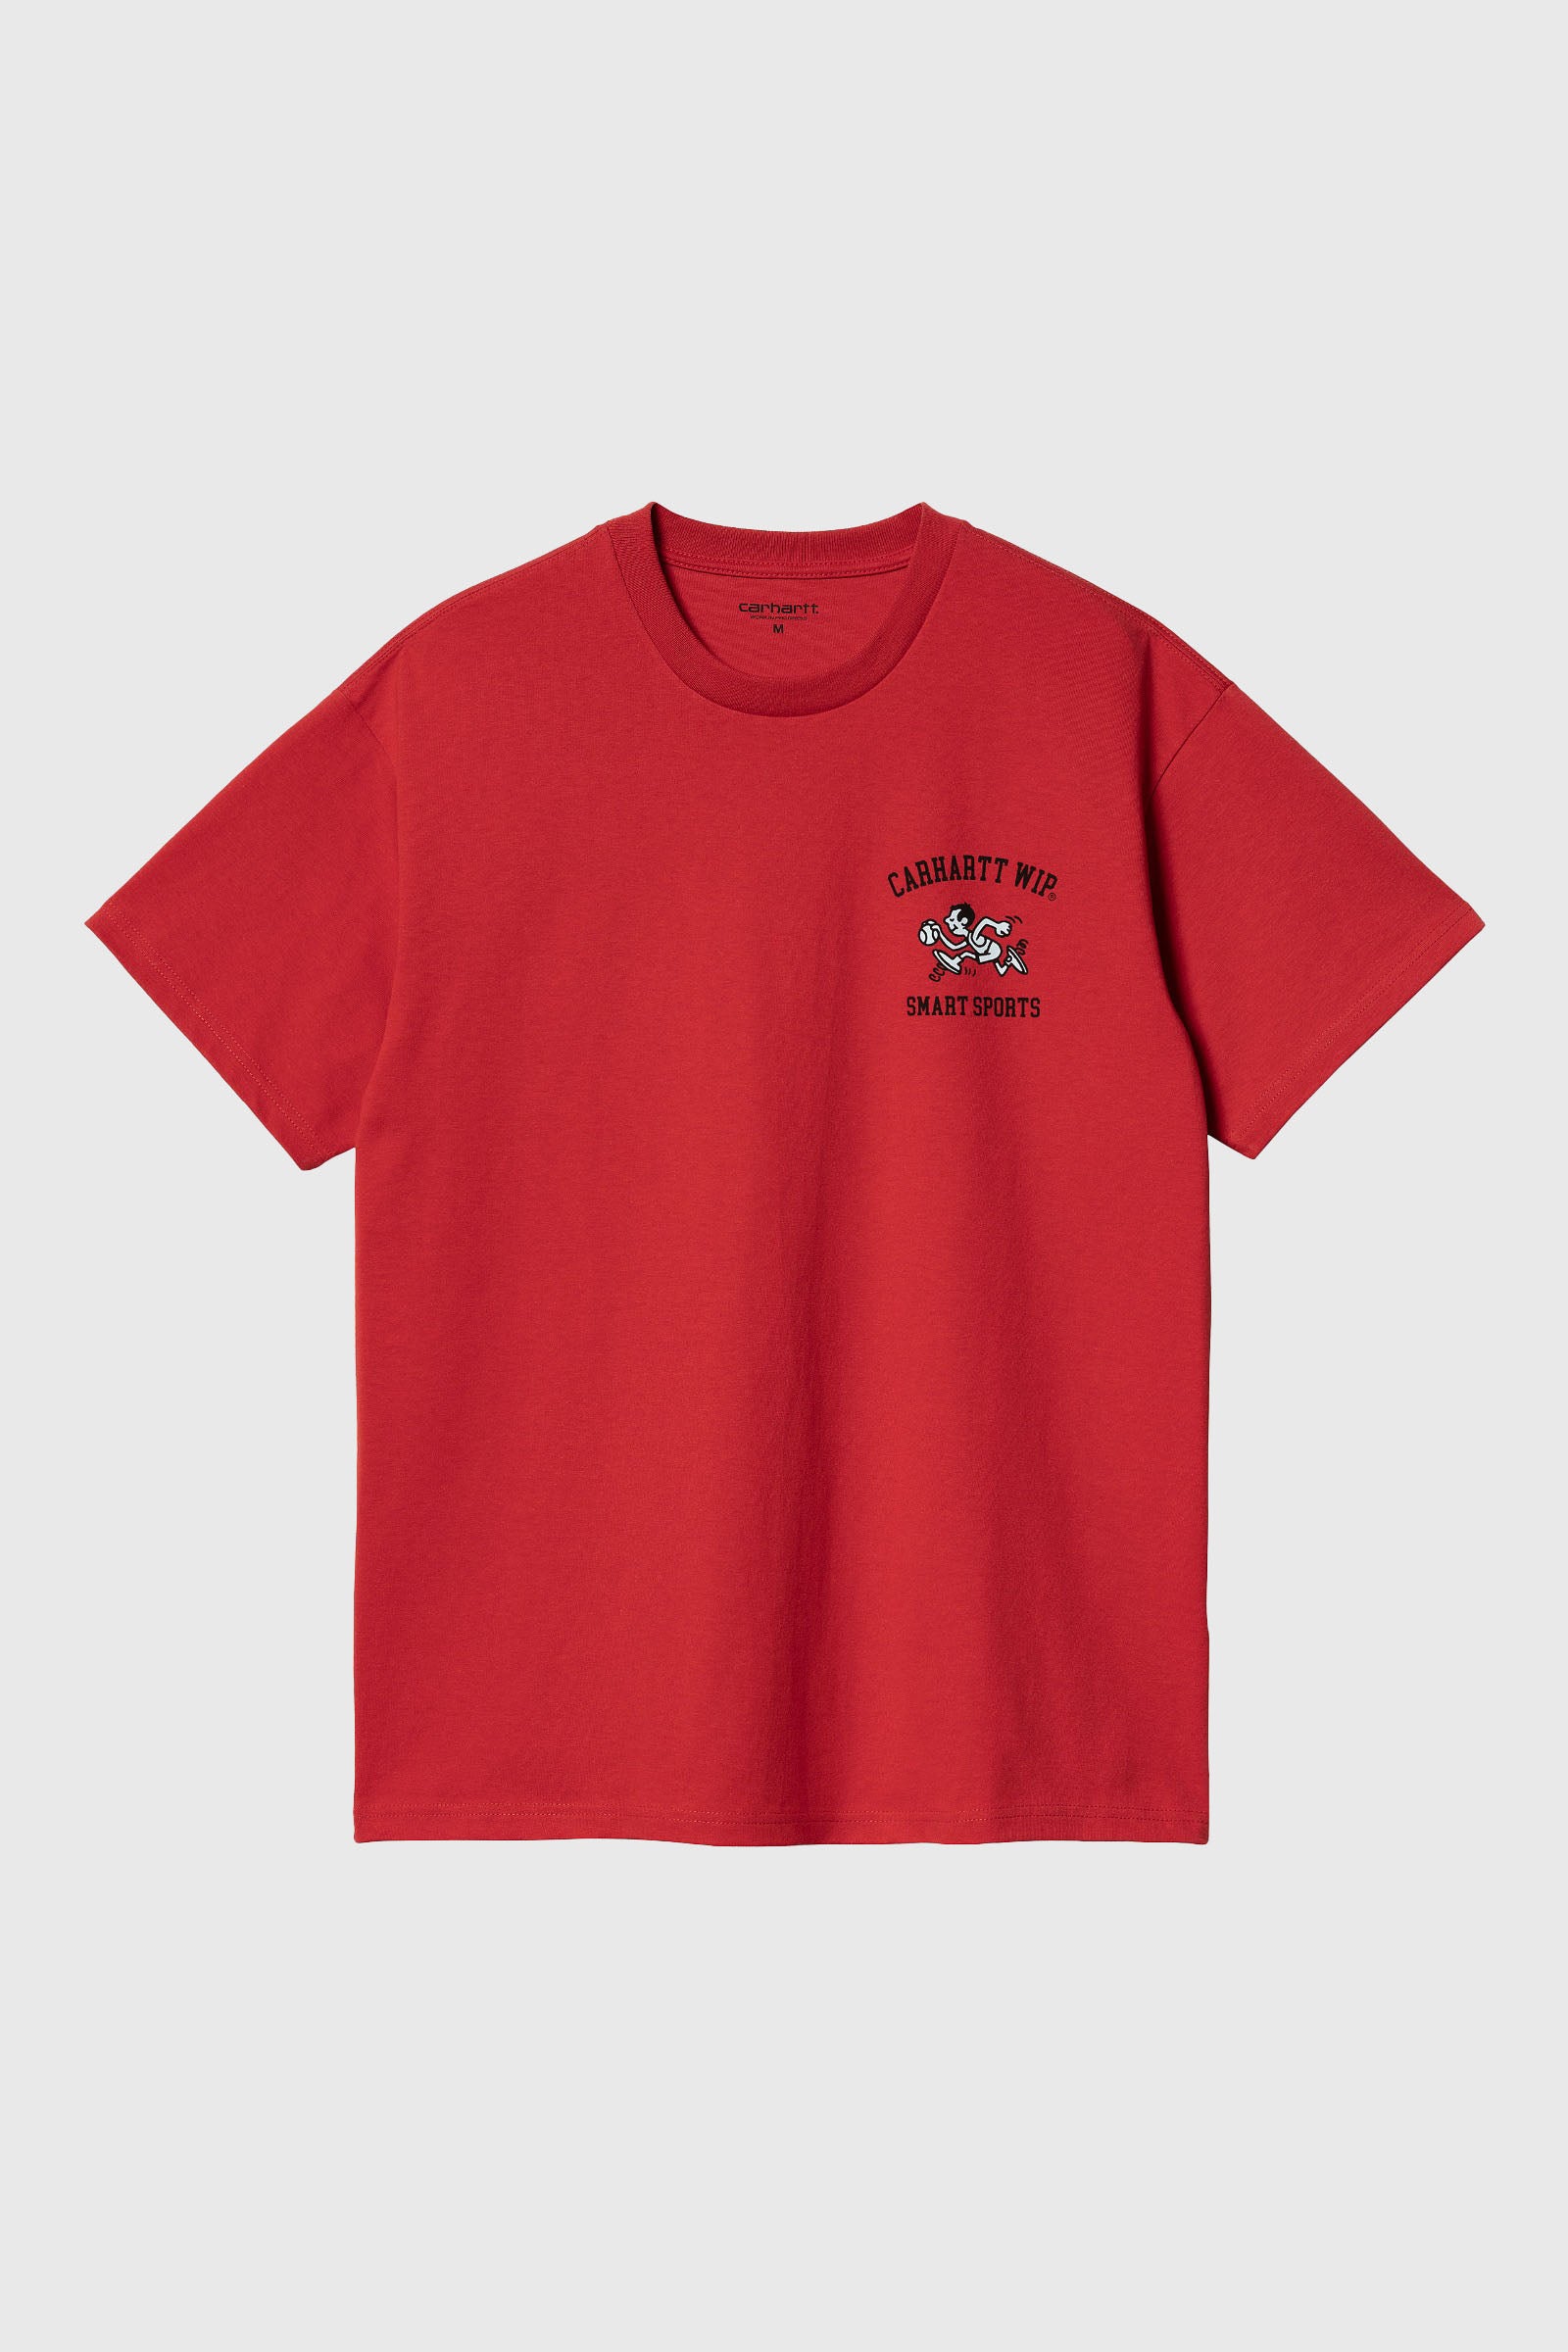 Carhartt Wip S/s Smart Sports T-shirt Rosso Uomo - 3